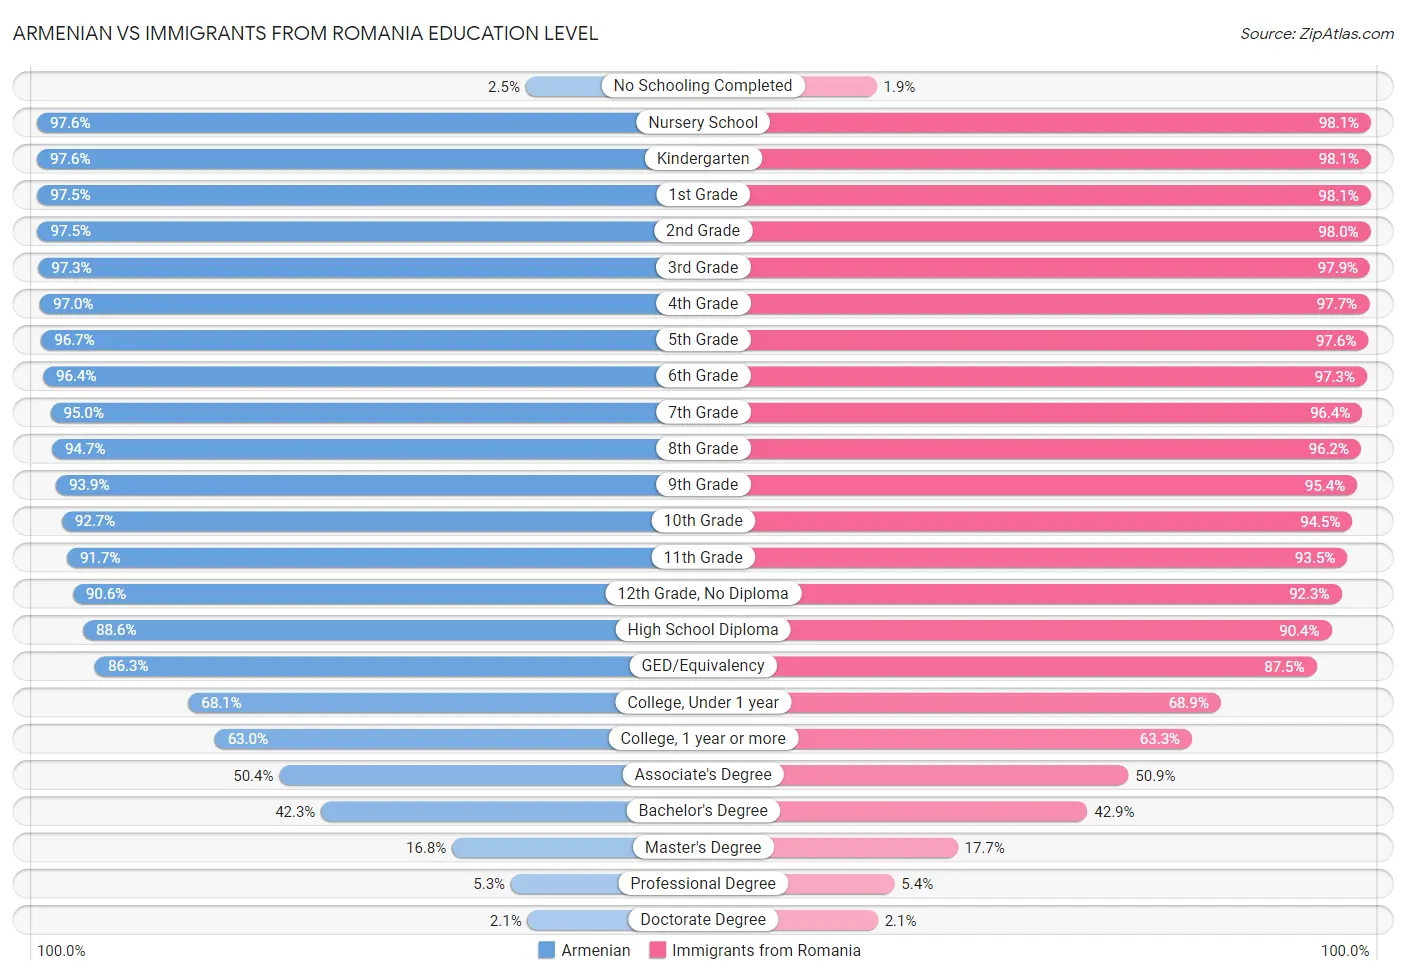 Armenian vs Immigrants from Romania Education Level